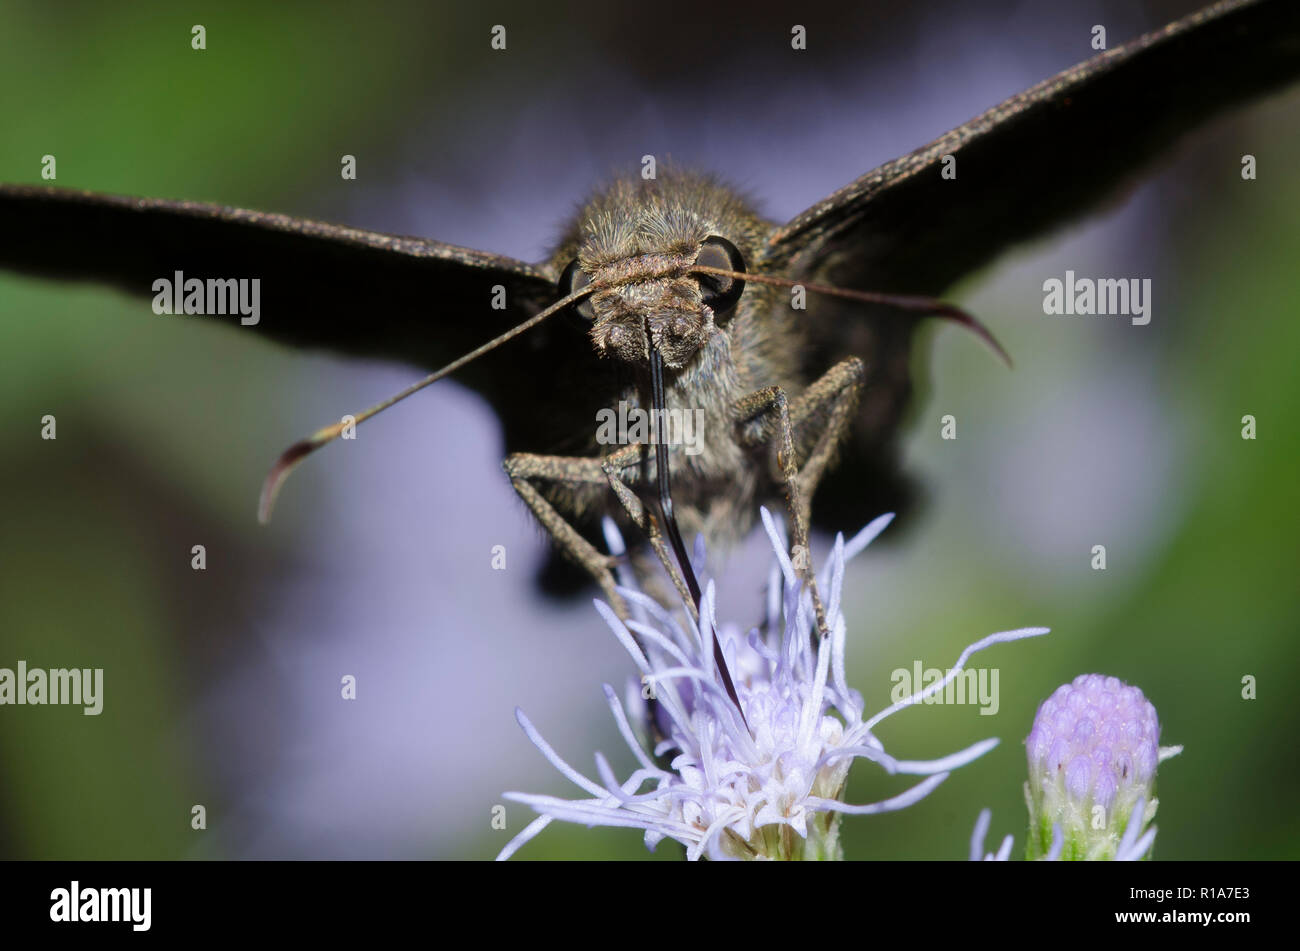 Brown Longtail, Spicauda procne, on mist flower, Conoclinium sp. Stock Photo